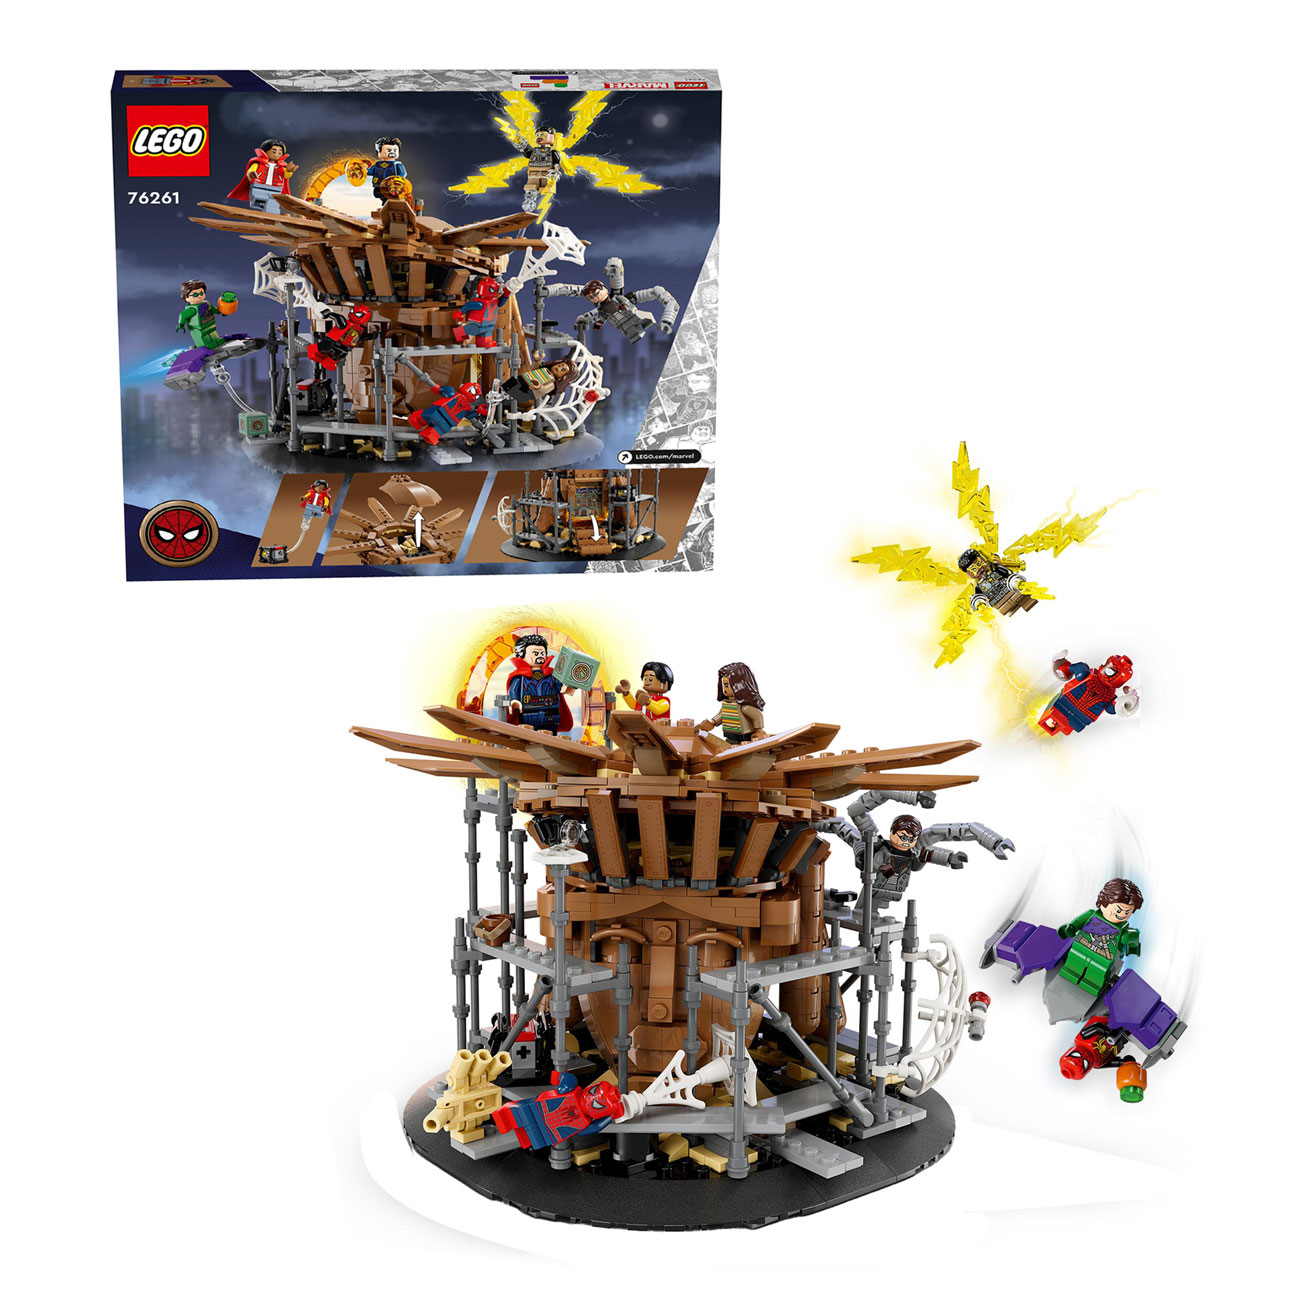 76261 LEGO Super Heroes Spider-man Final Battle | Thimble Toys